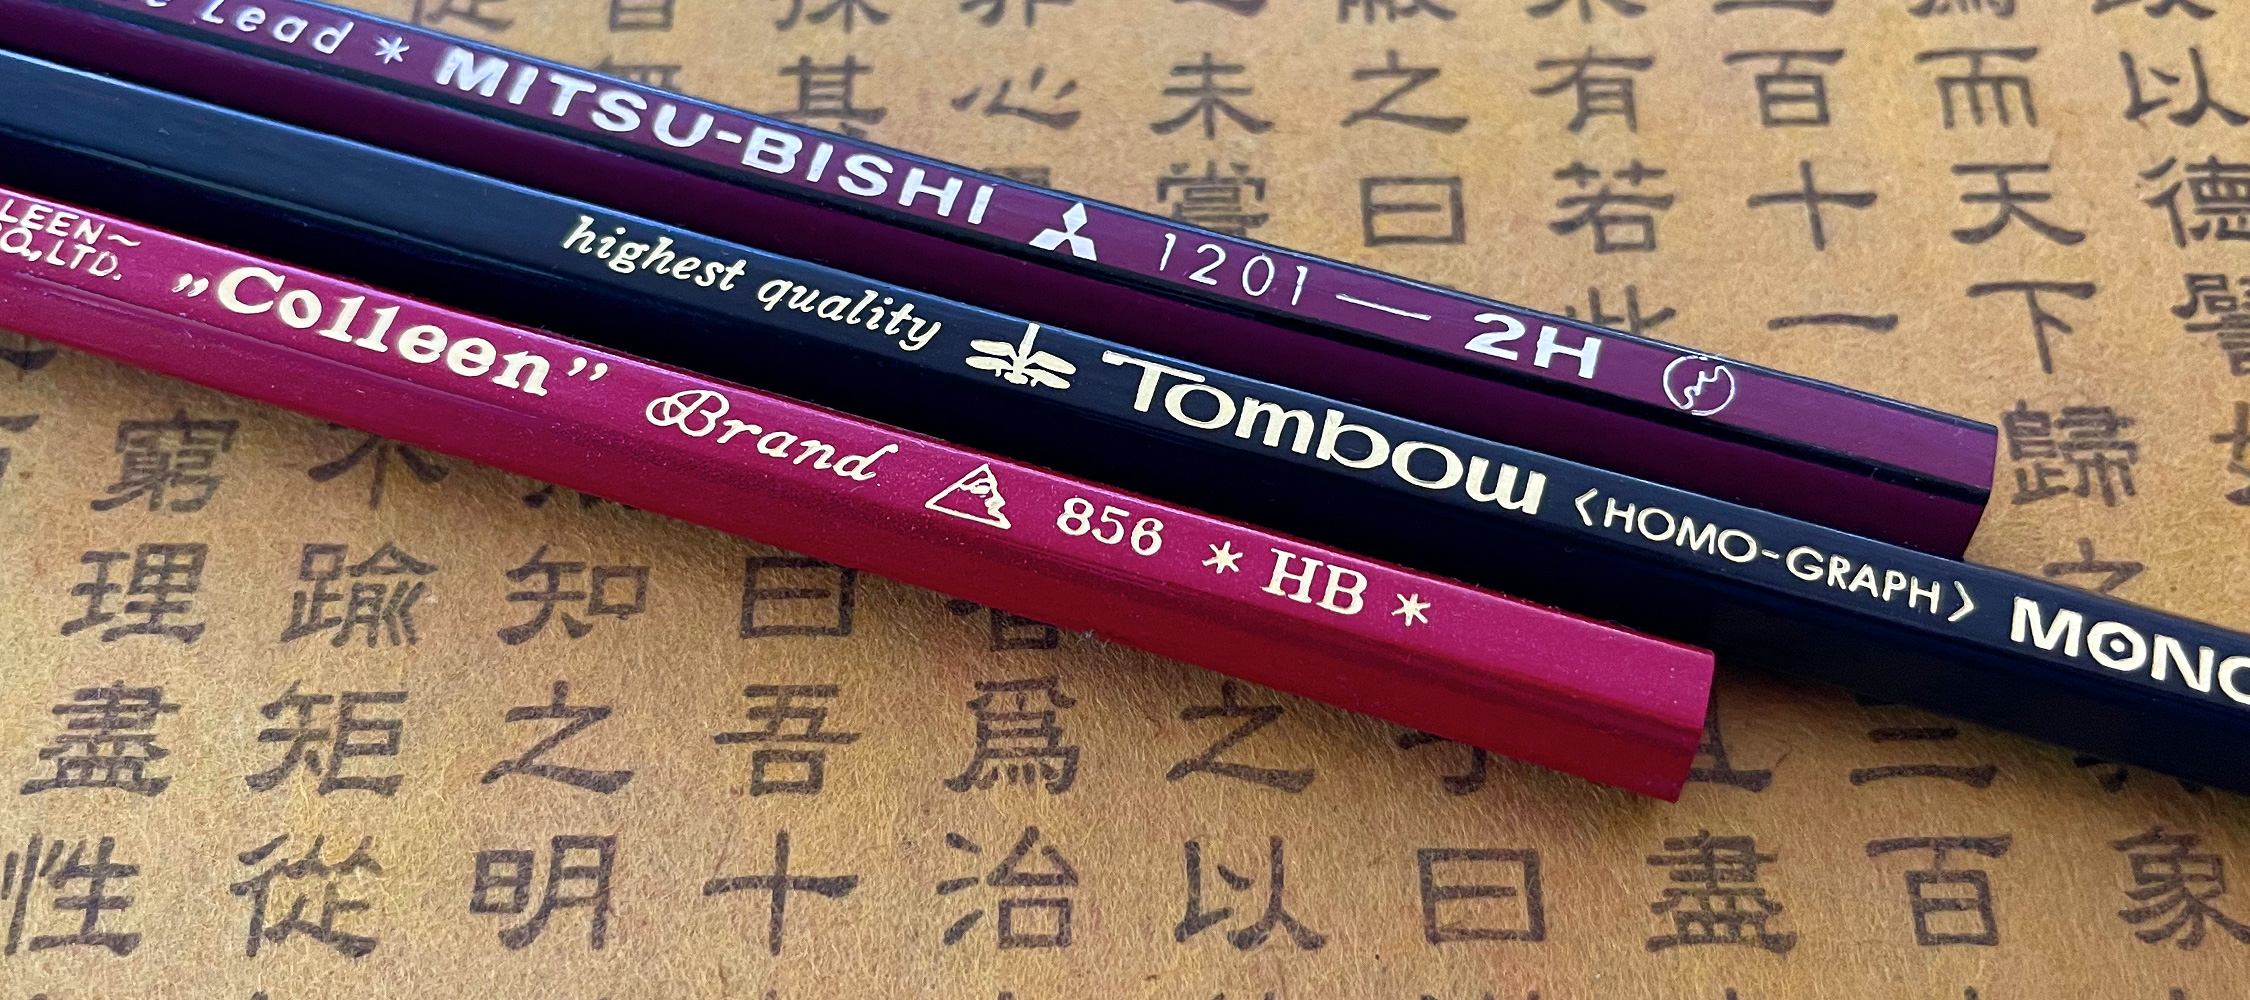 Mitsubishi, Tombow, Colleen Japanese pencils